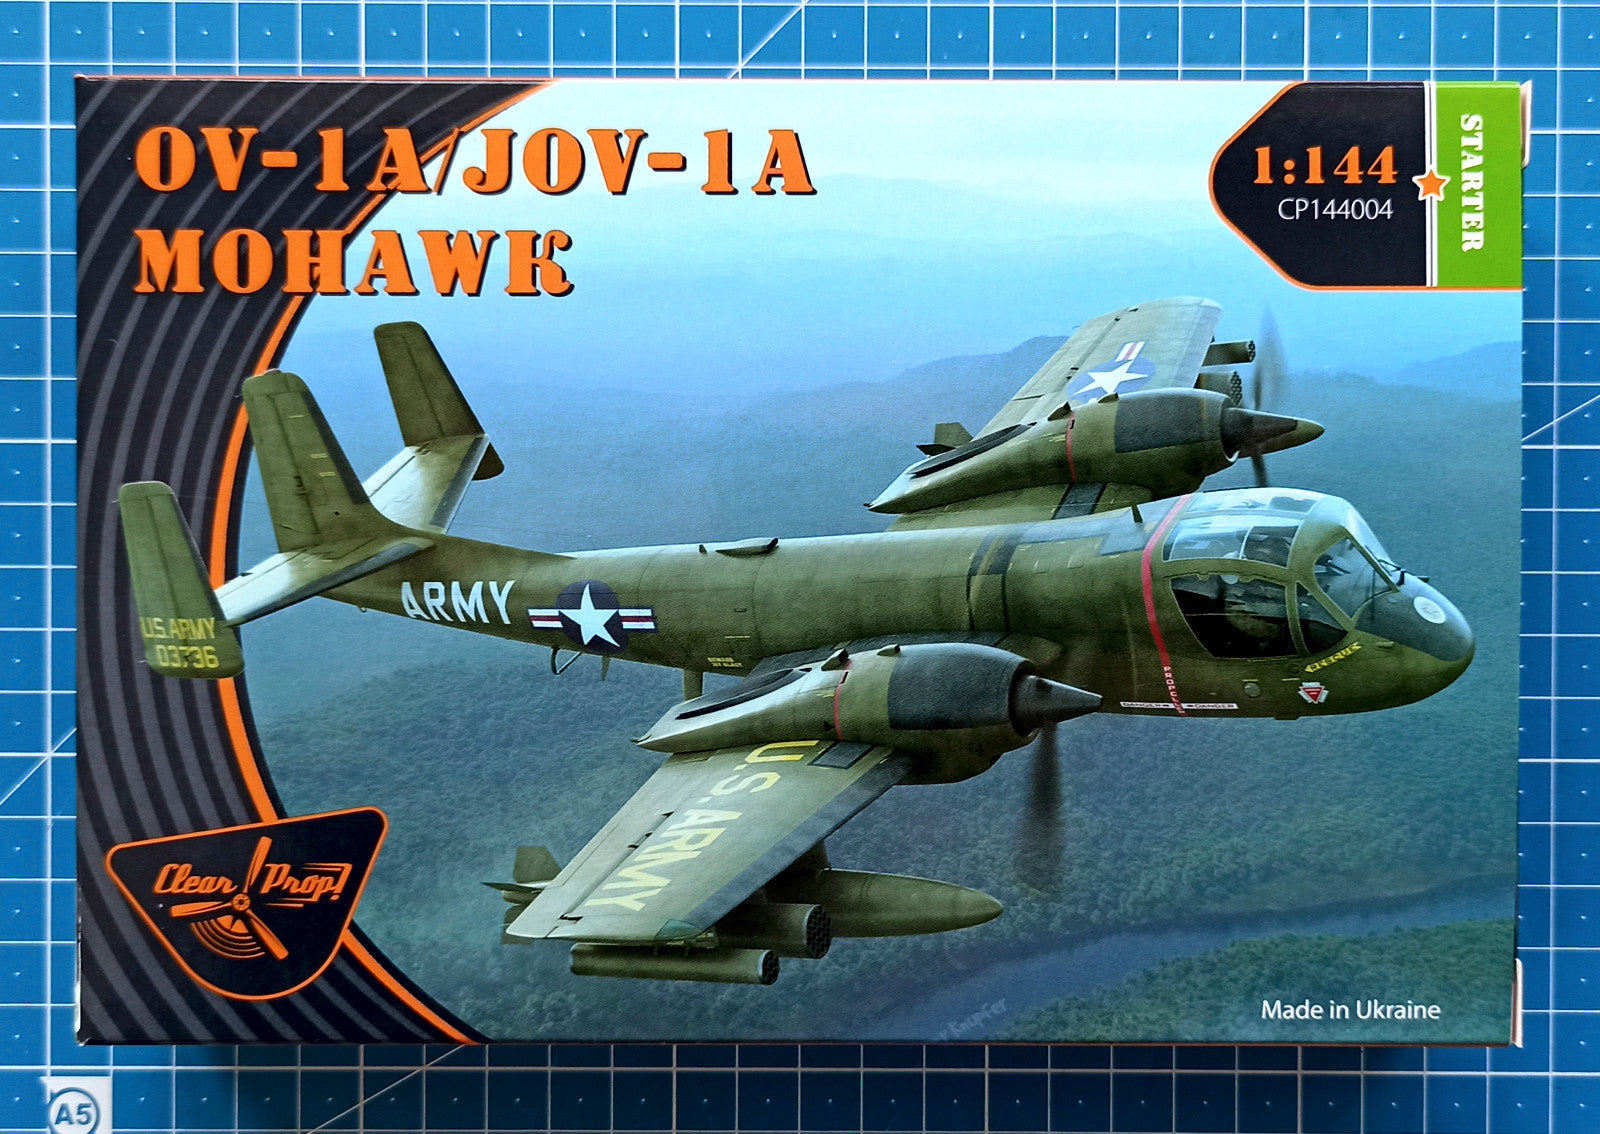 1/144 Grumman OV-1A/JOV-1A Mohawk. Clear Prop! CP144004 – UA-hobby